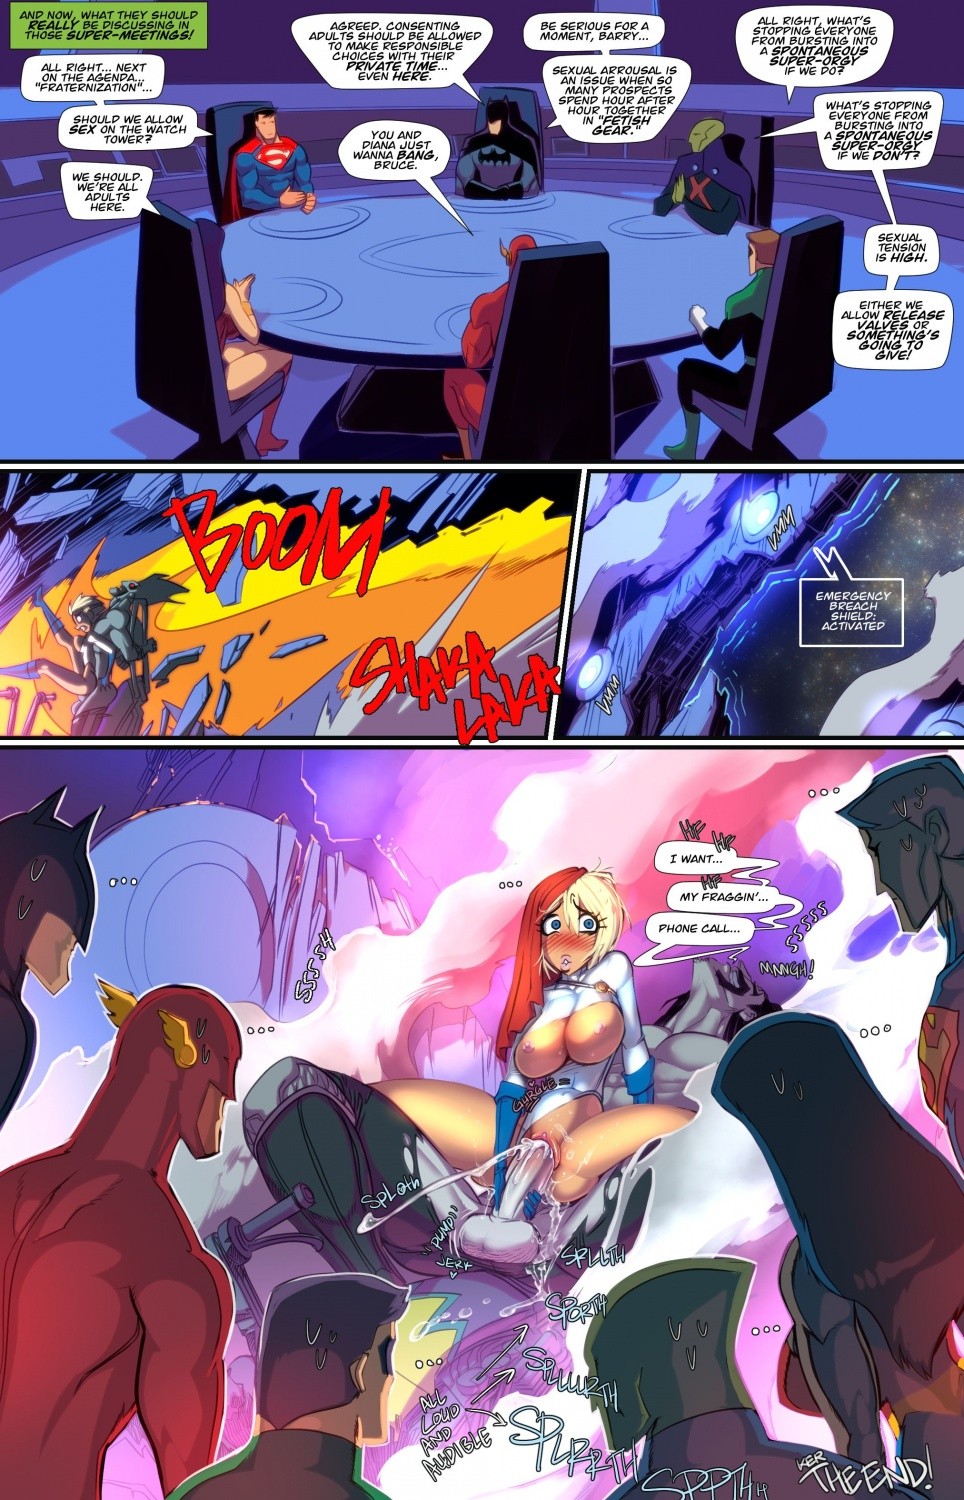 Powergirl Porn Comic